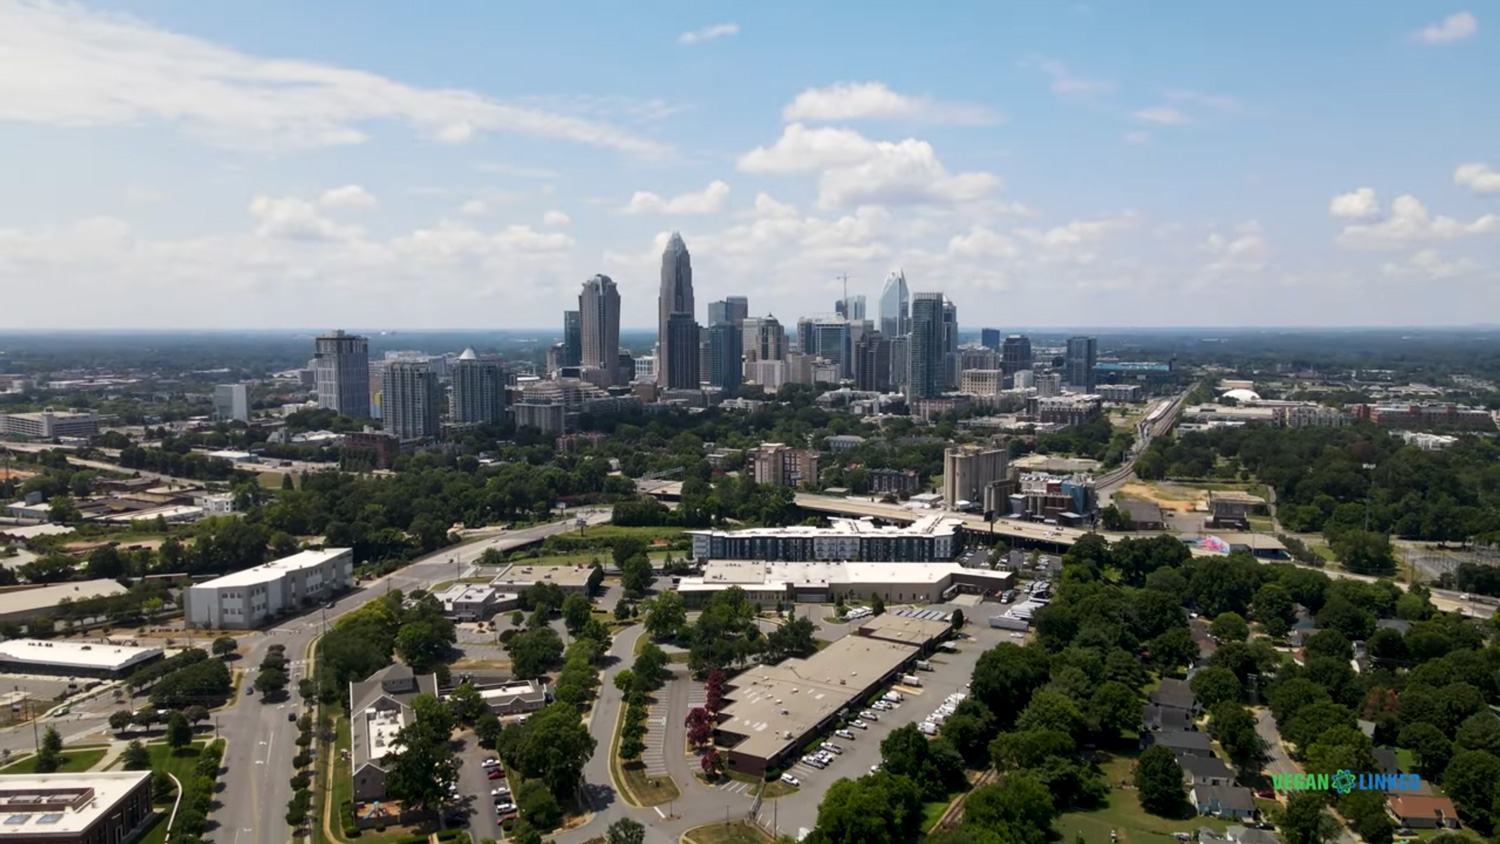 Charlotte North Carolina skyline from drone shot